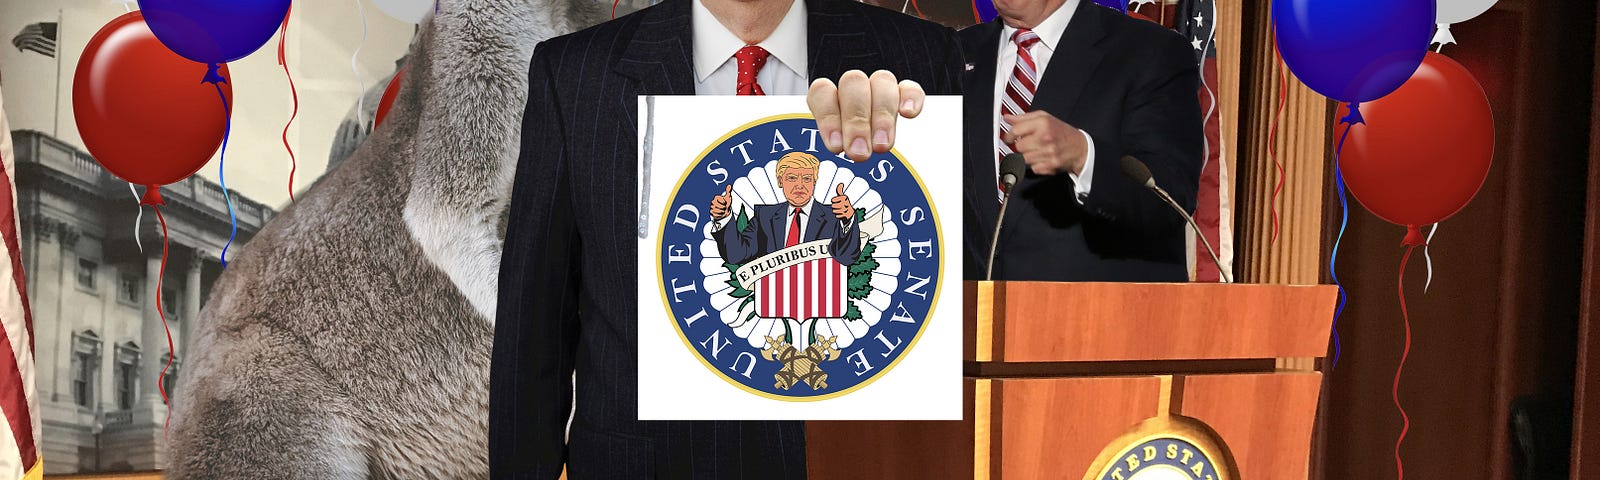 McConnell, Trump and a Kangaroo present a fake Senate seal.